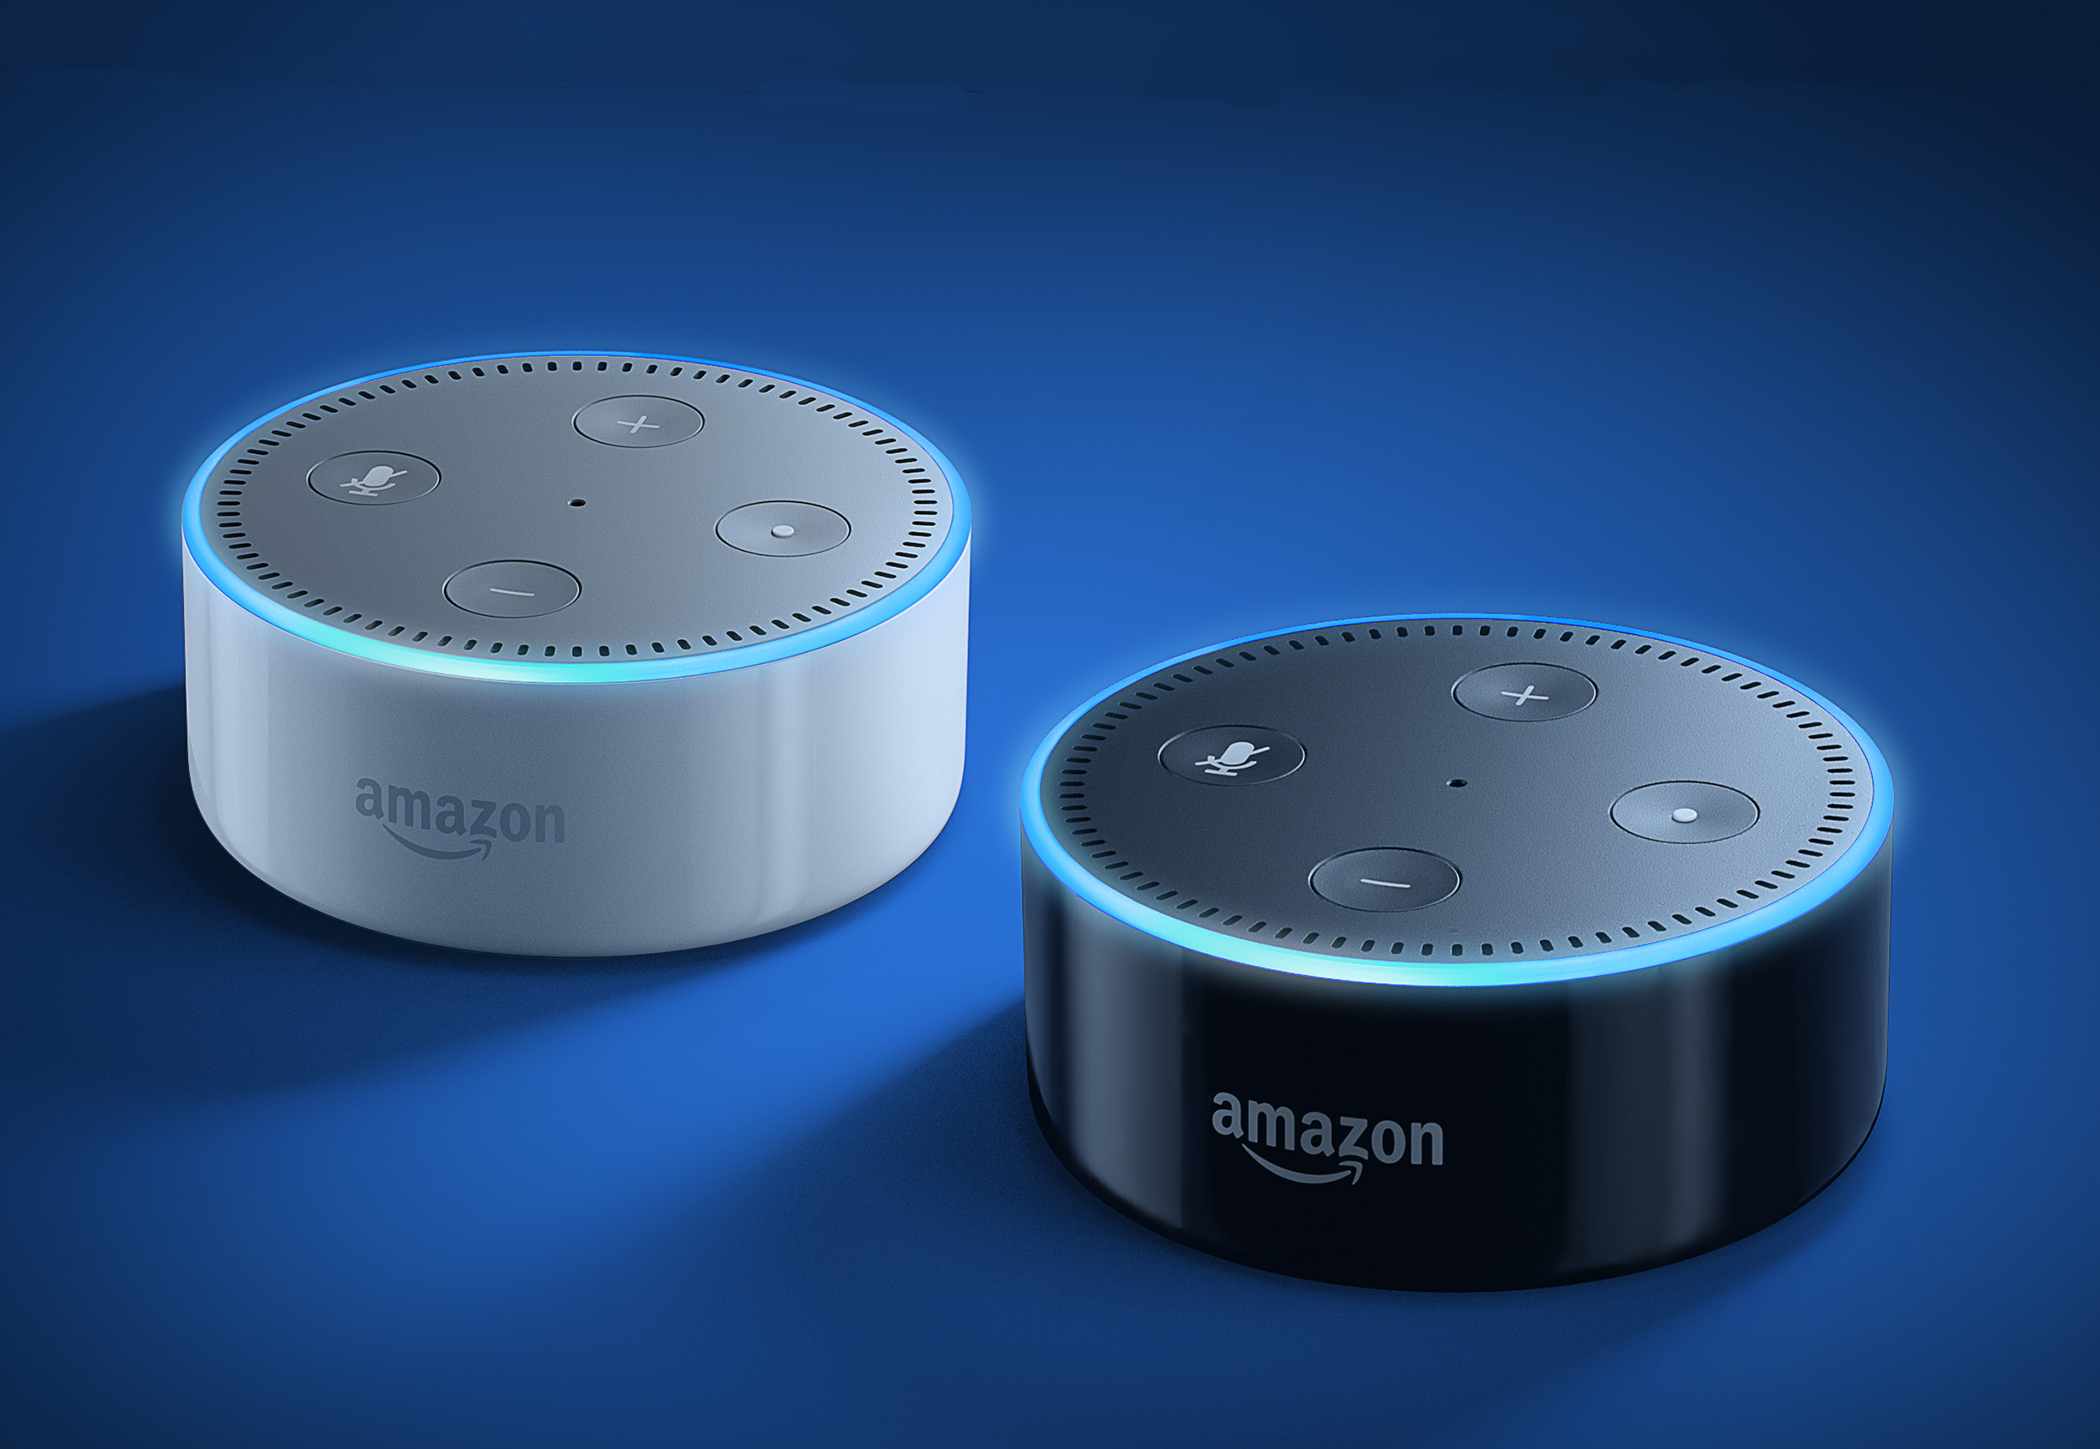 Amazon Echo Dot devices